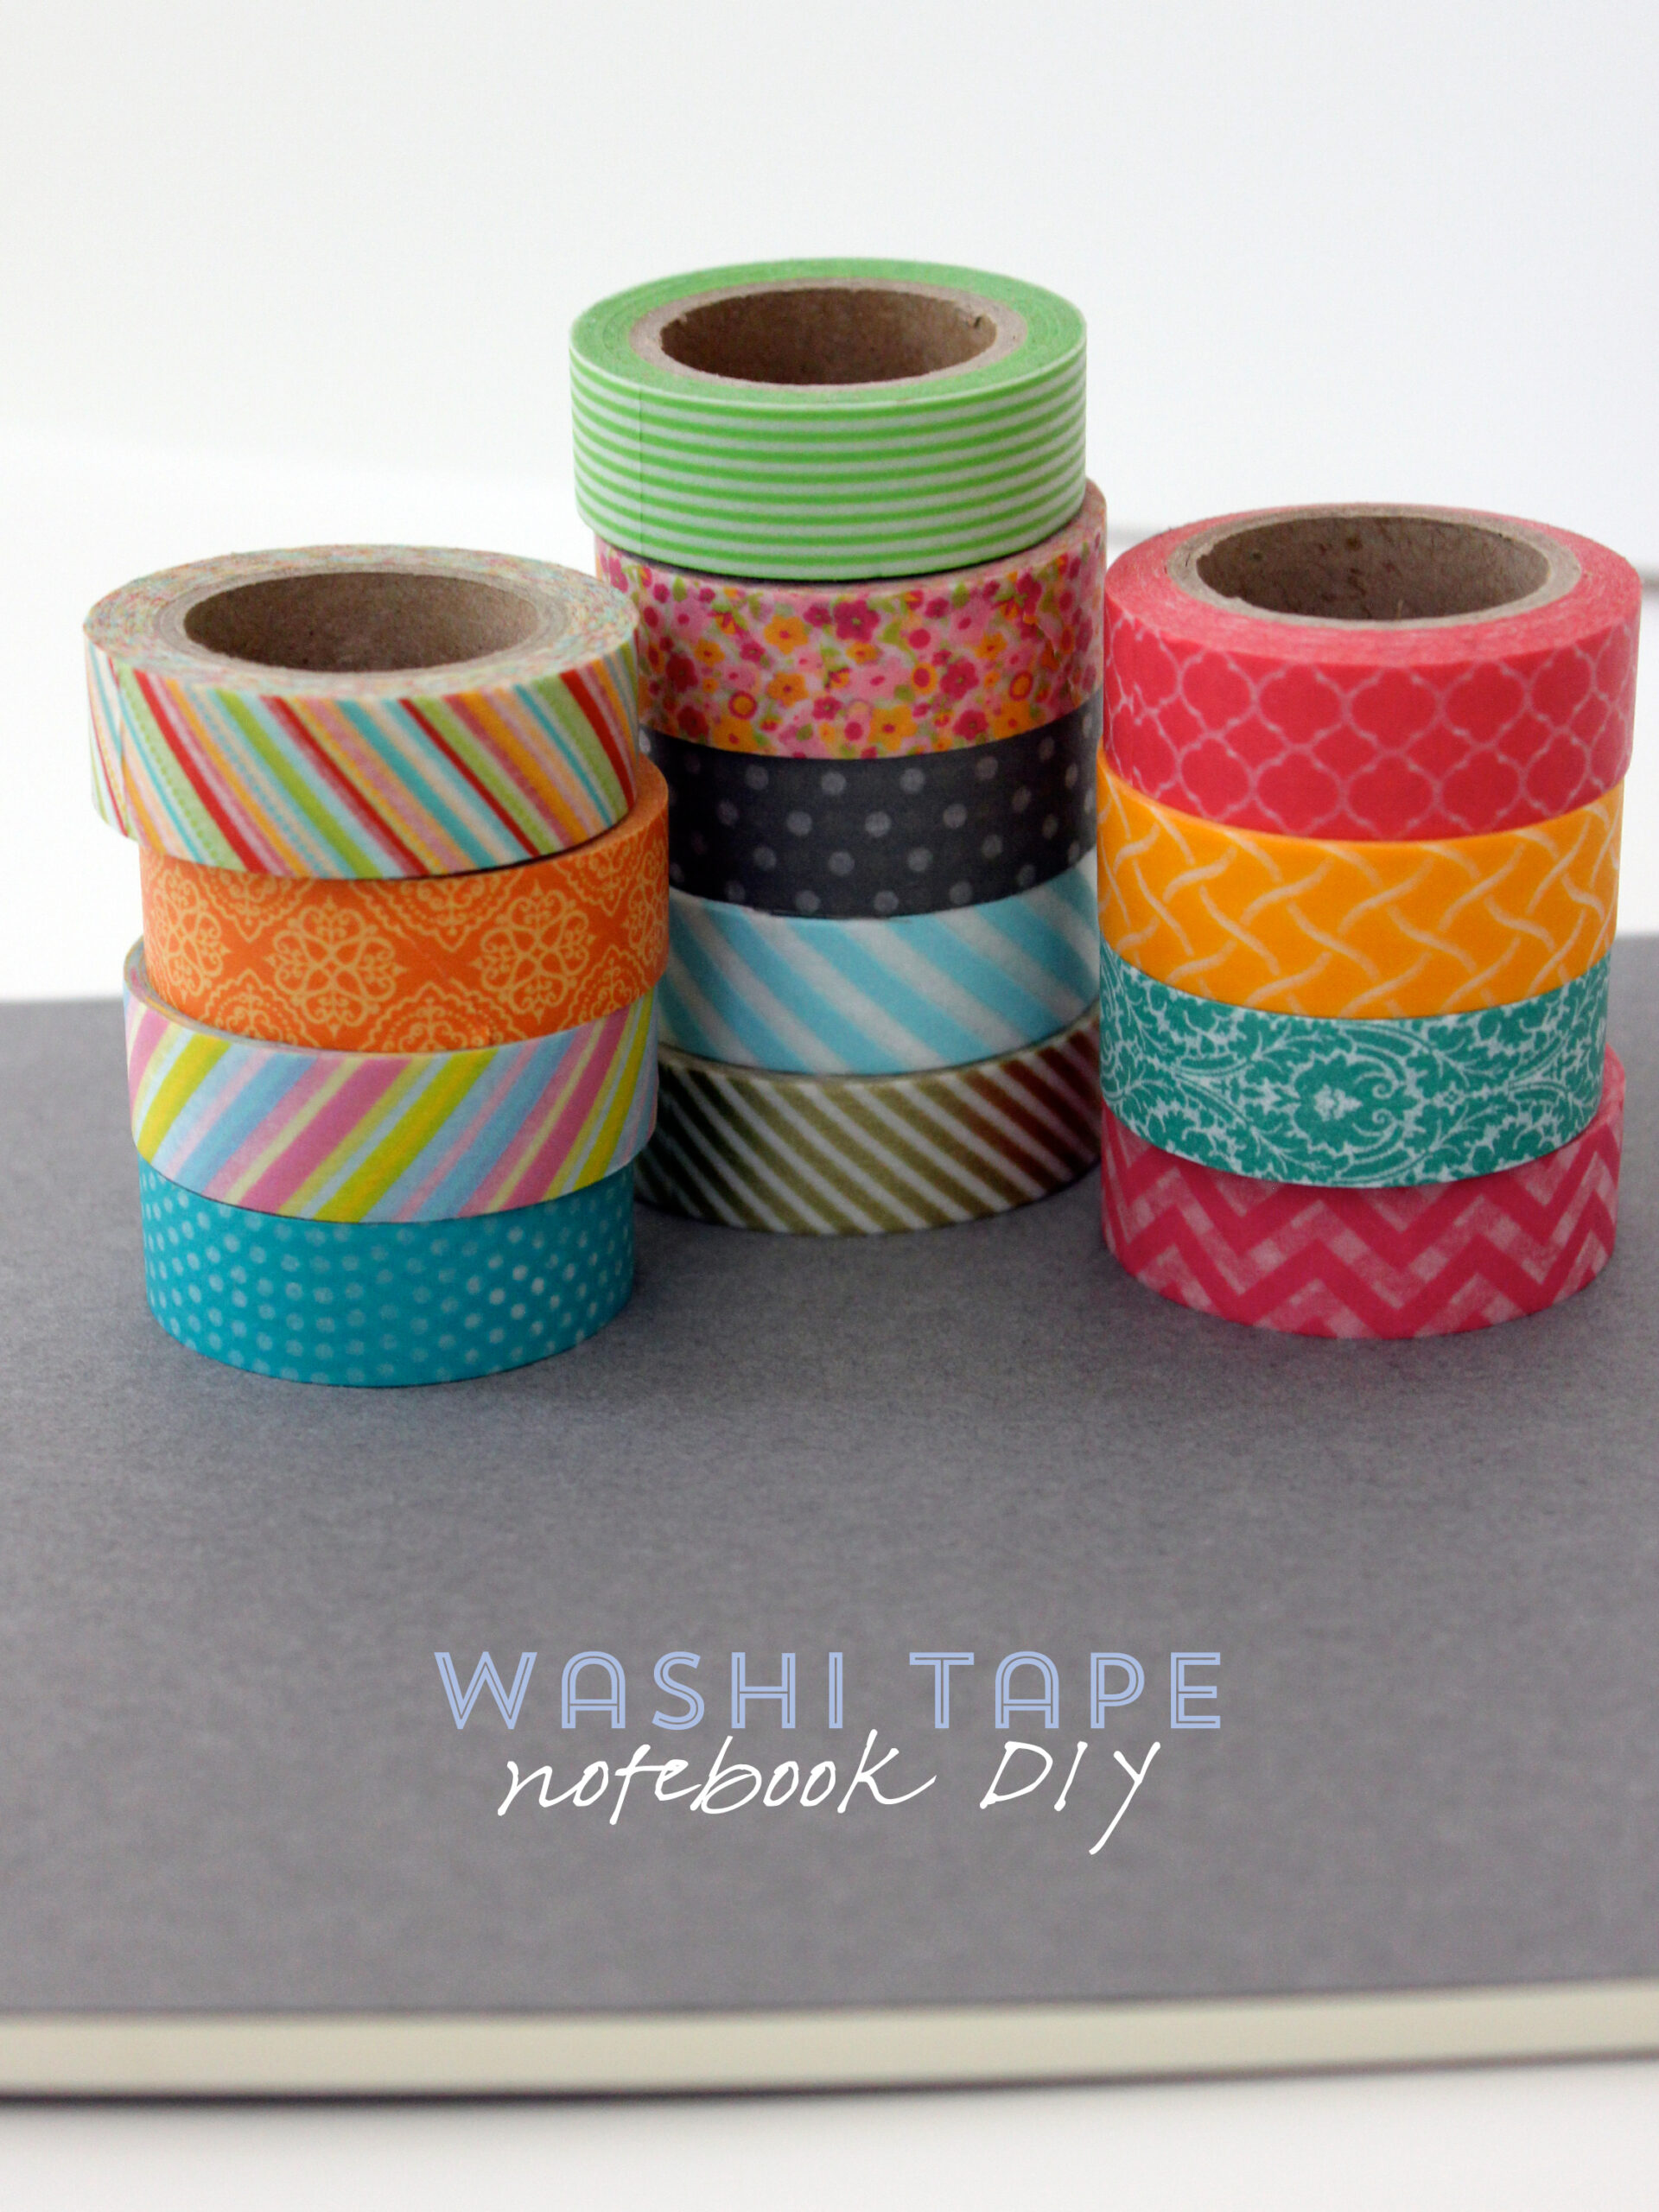 DIY Washi tape notebook